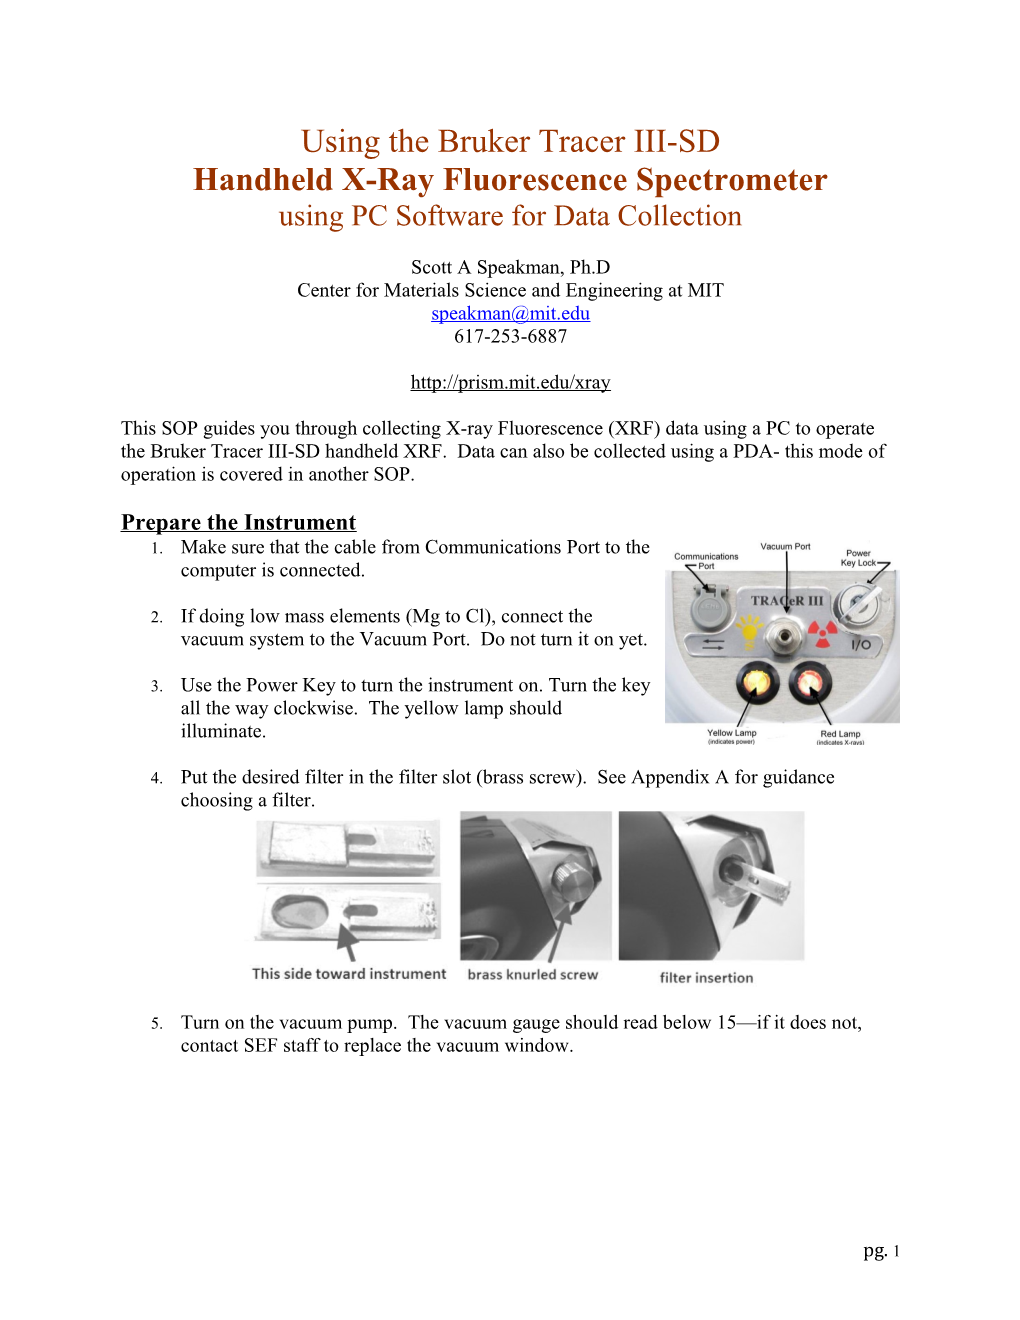 Handheld X-Ray Fluorescence Spectrometer